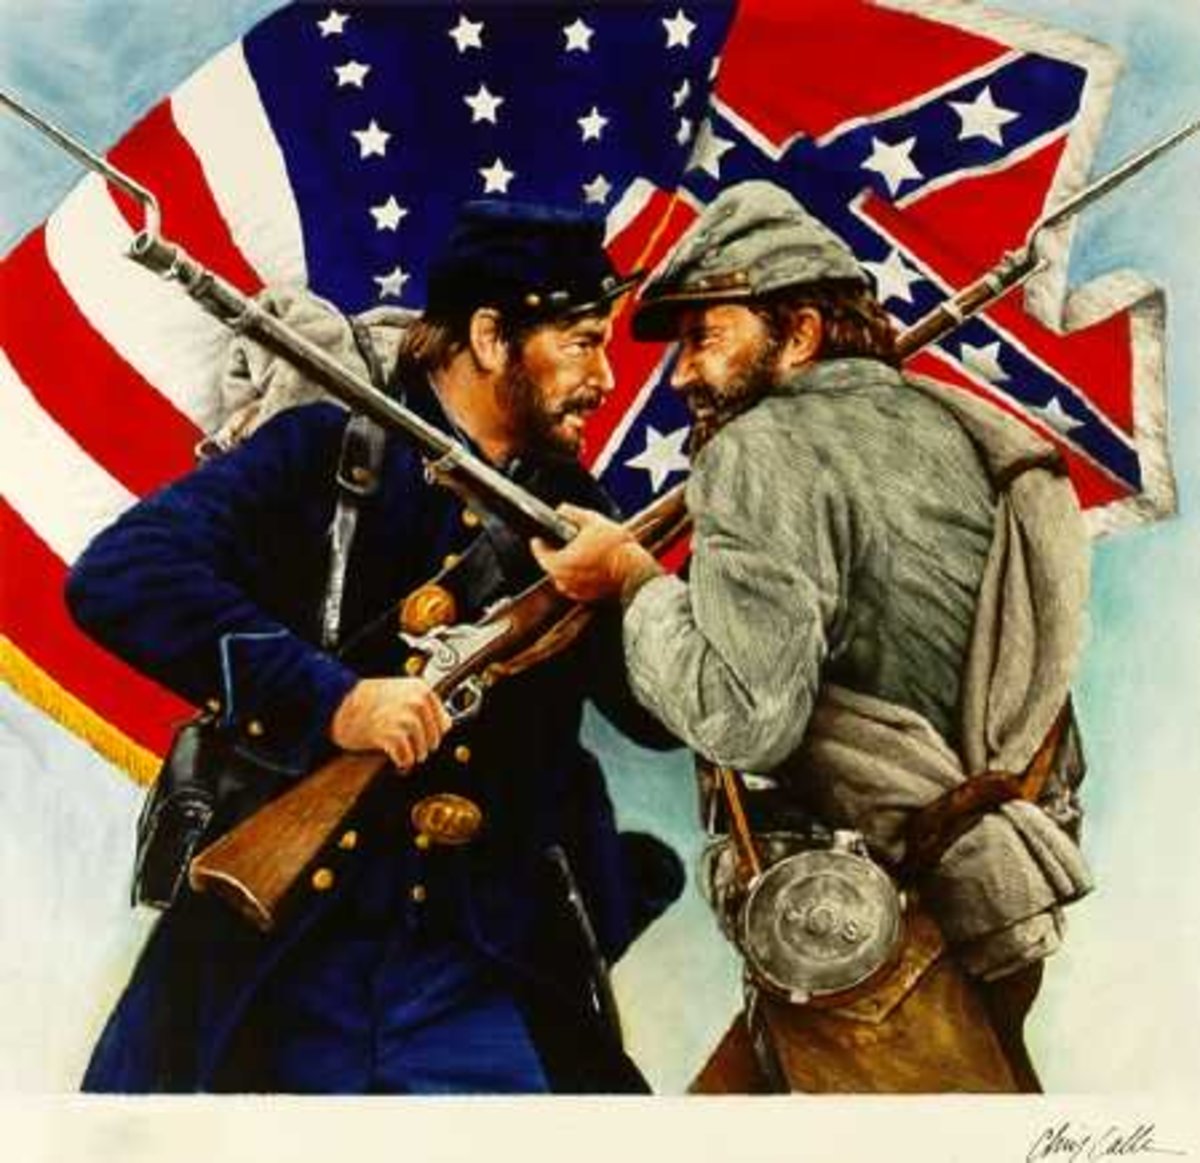 Image result for american civil war